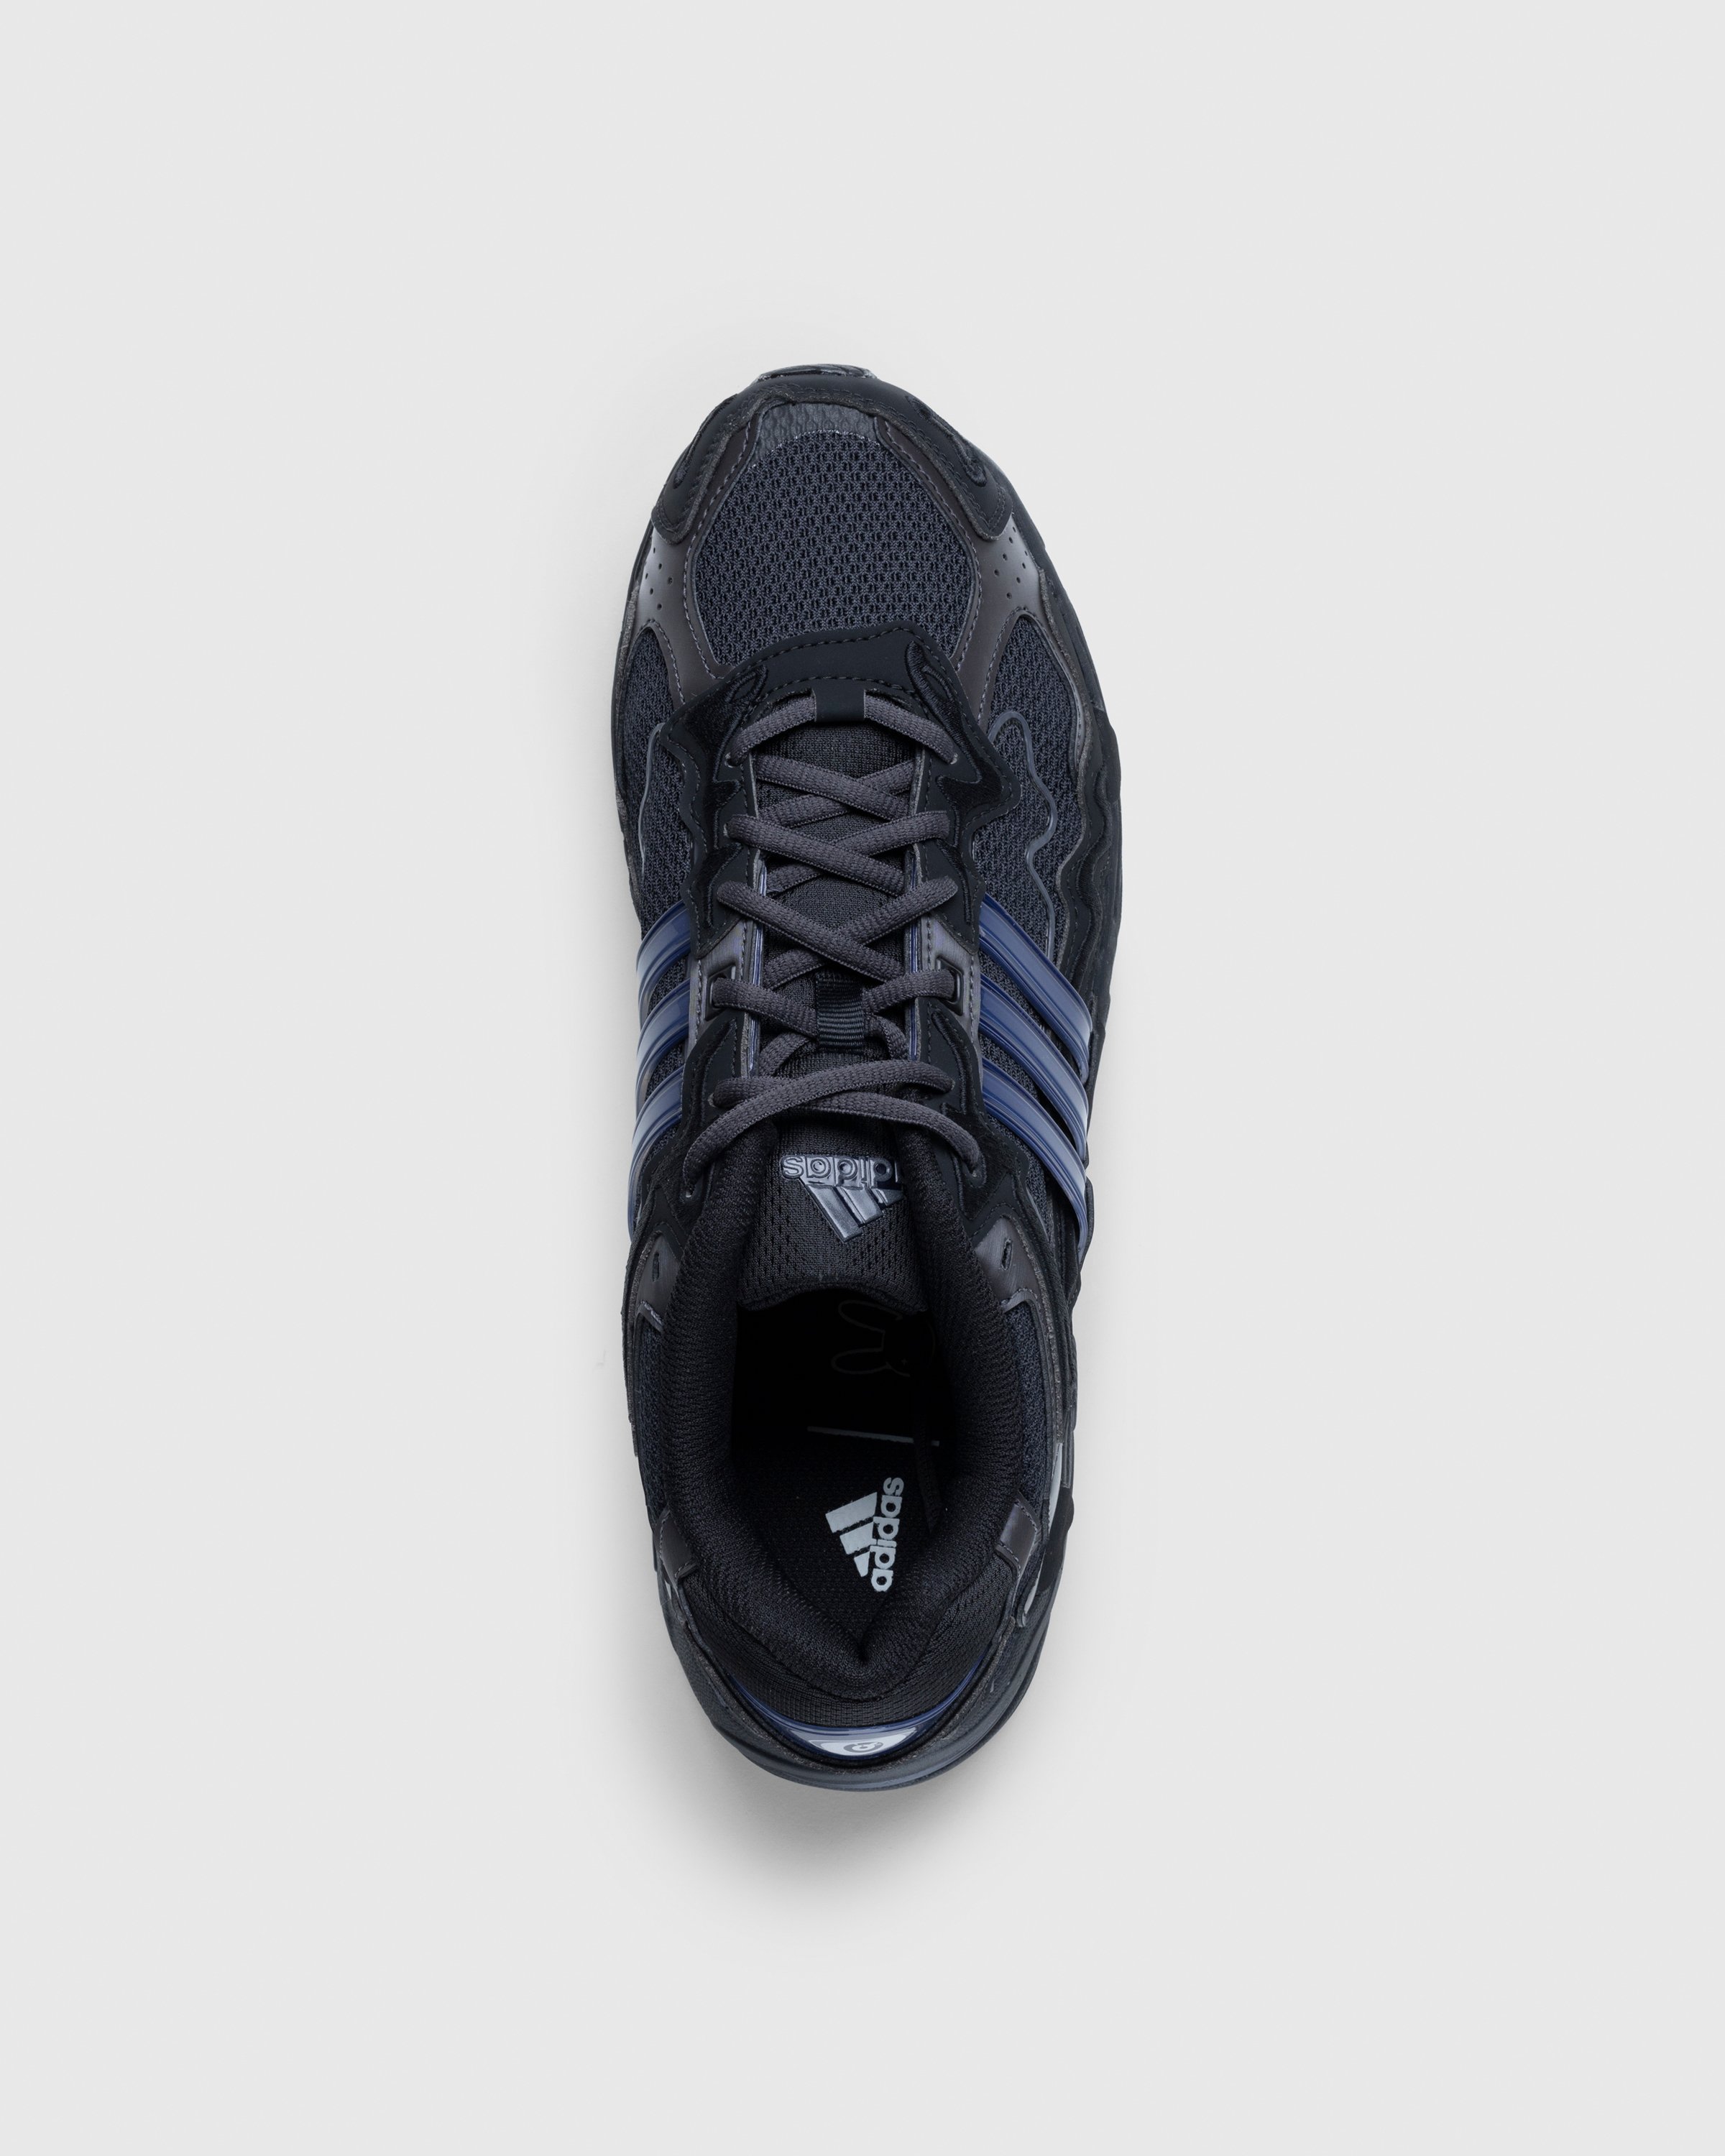 Adidas x Bad Bunny - Response Black - Footwear - Black - Image 5